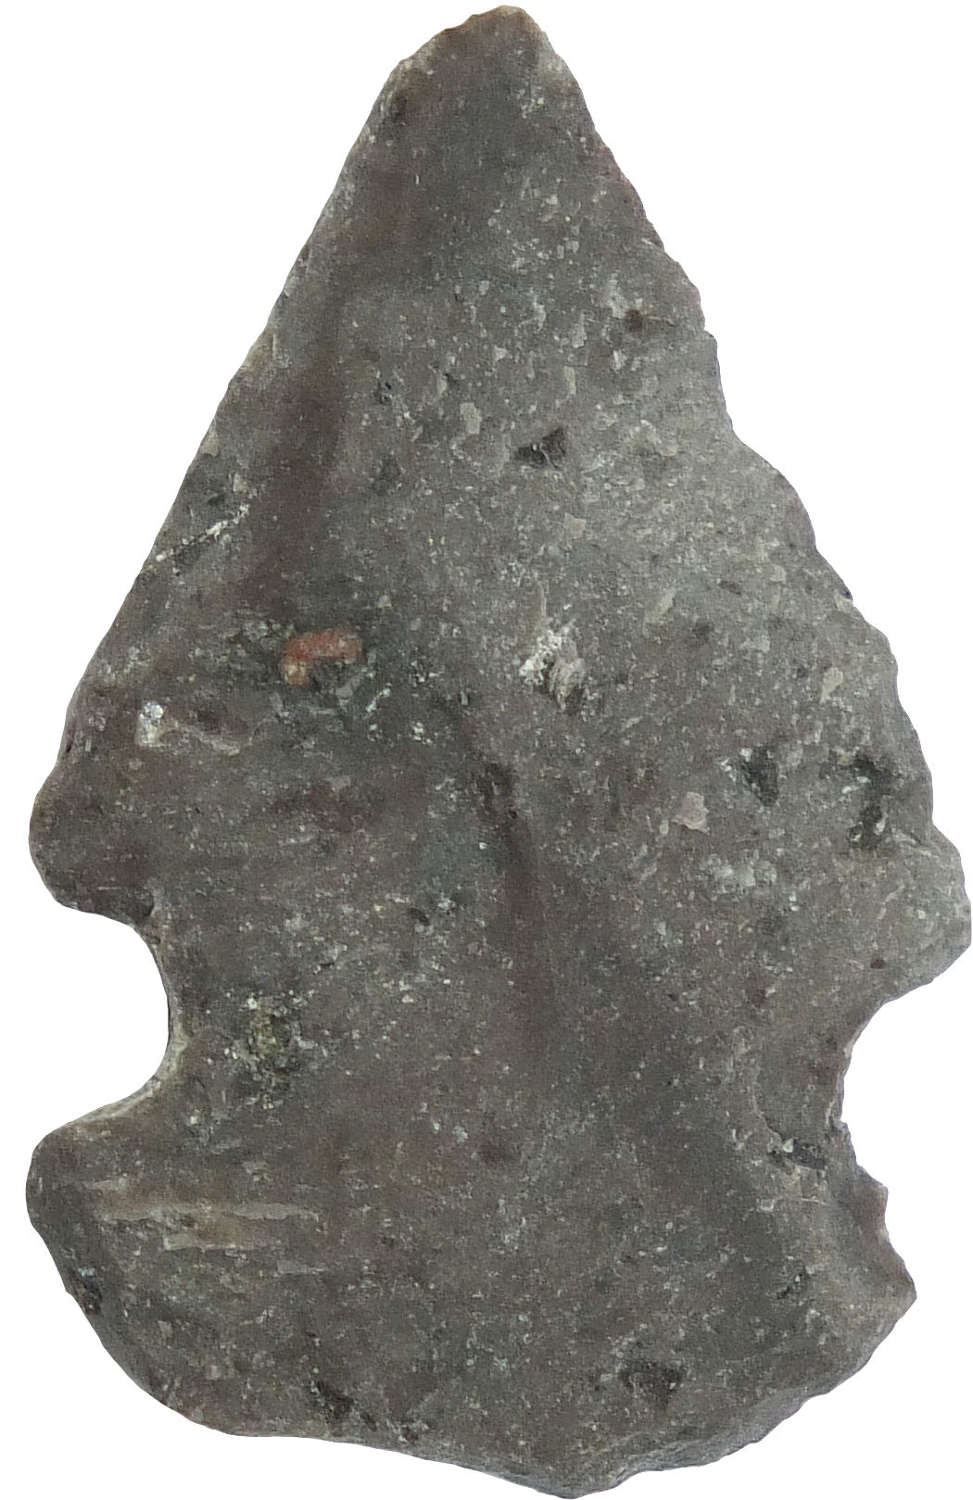 A small North American Indian grey stone arrowhead